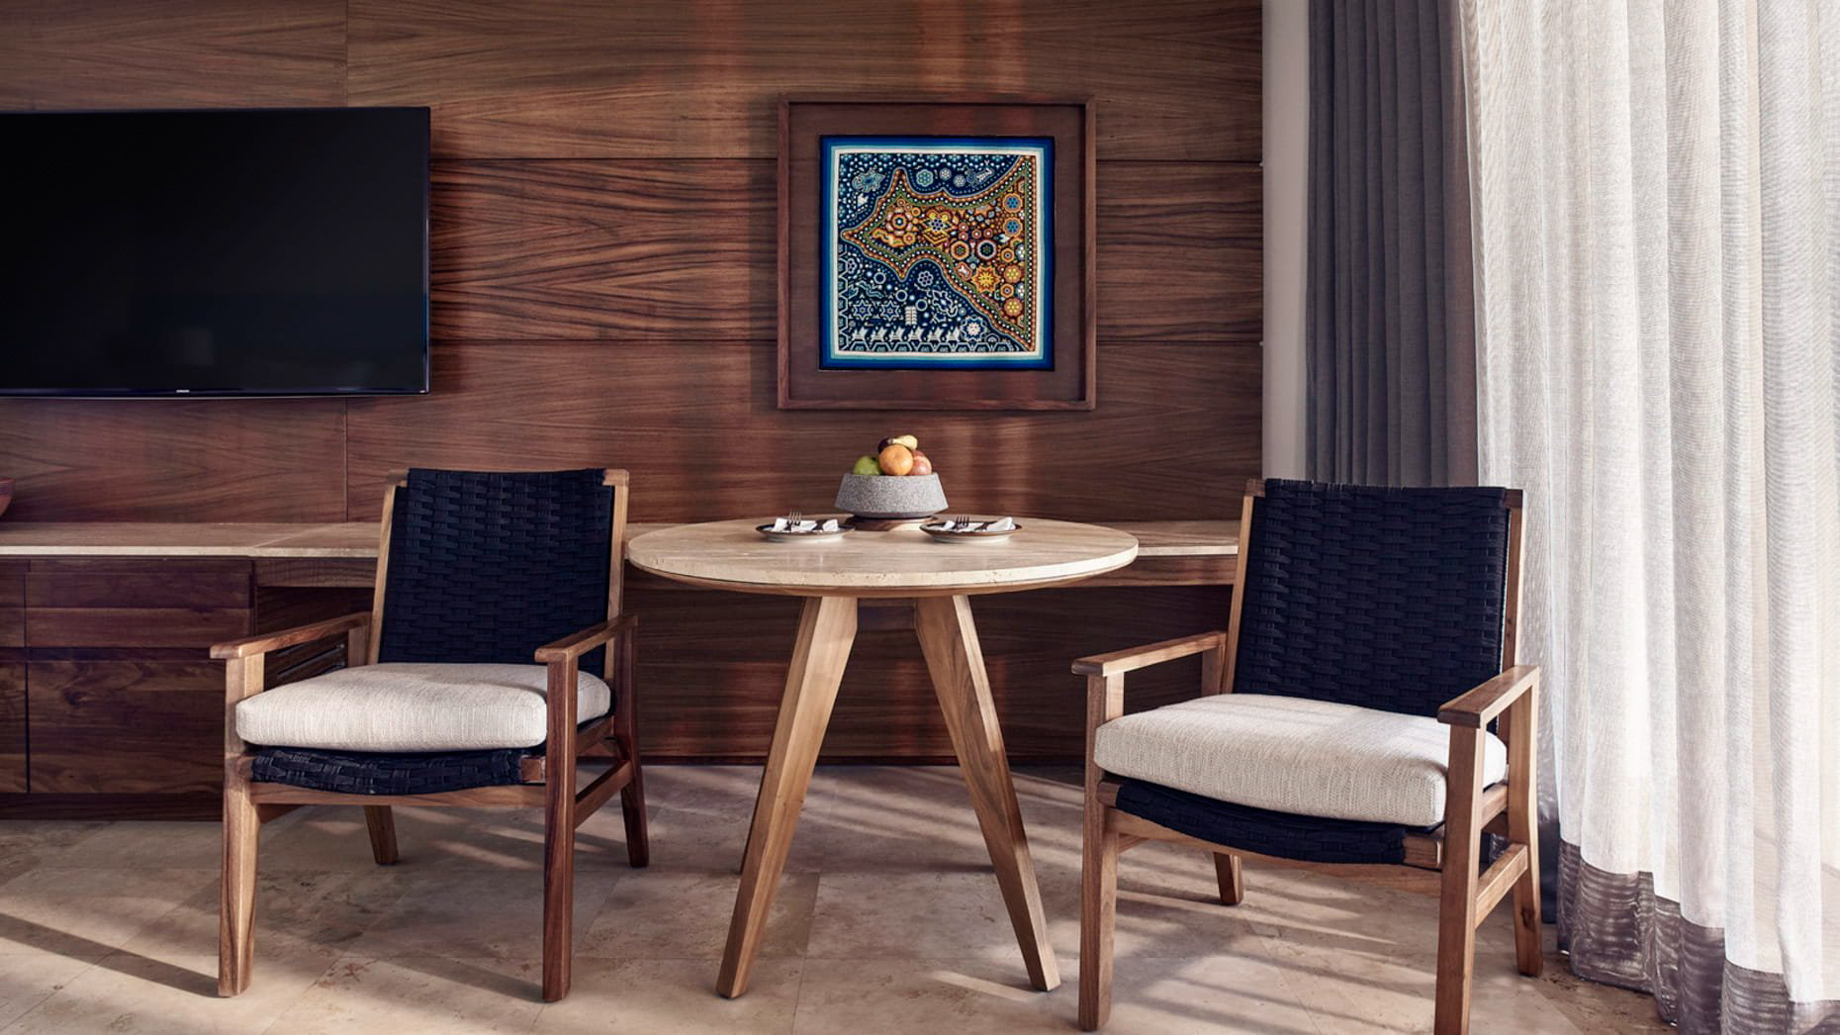 Four Seasons Resort Punta Mita – Nayarit, Mexico – Ocean Casita Table and Chairs